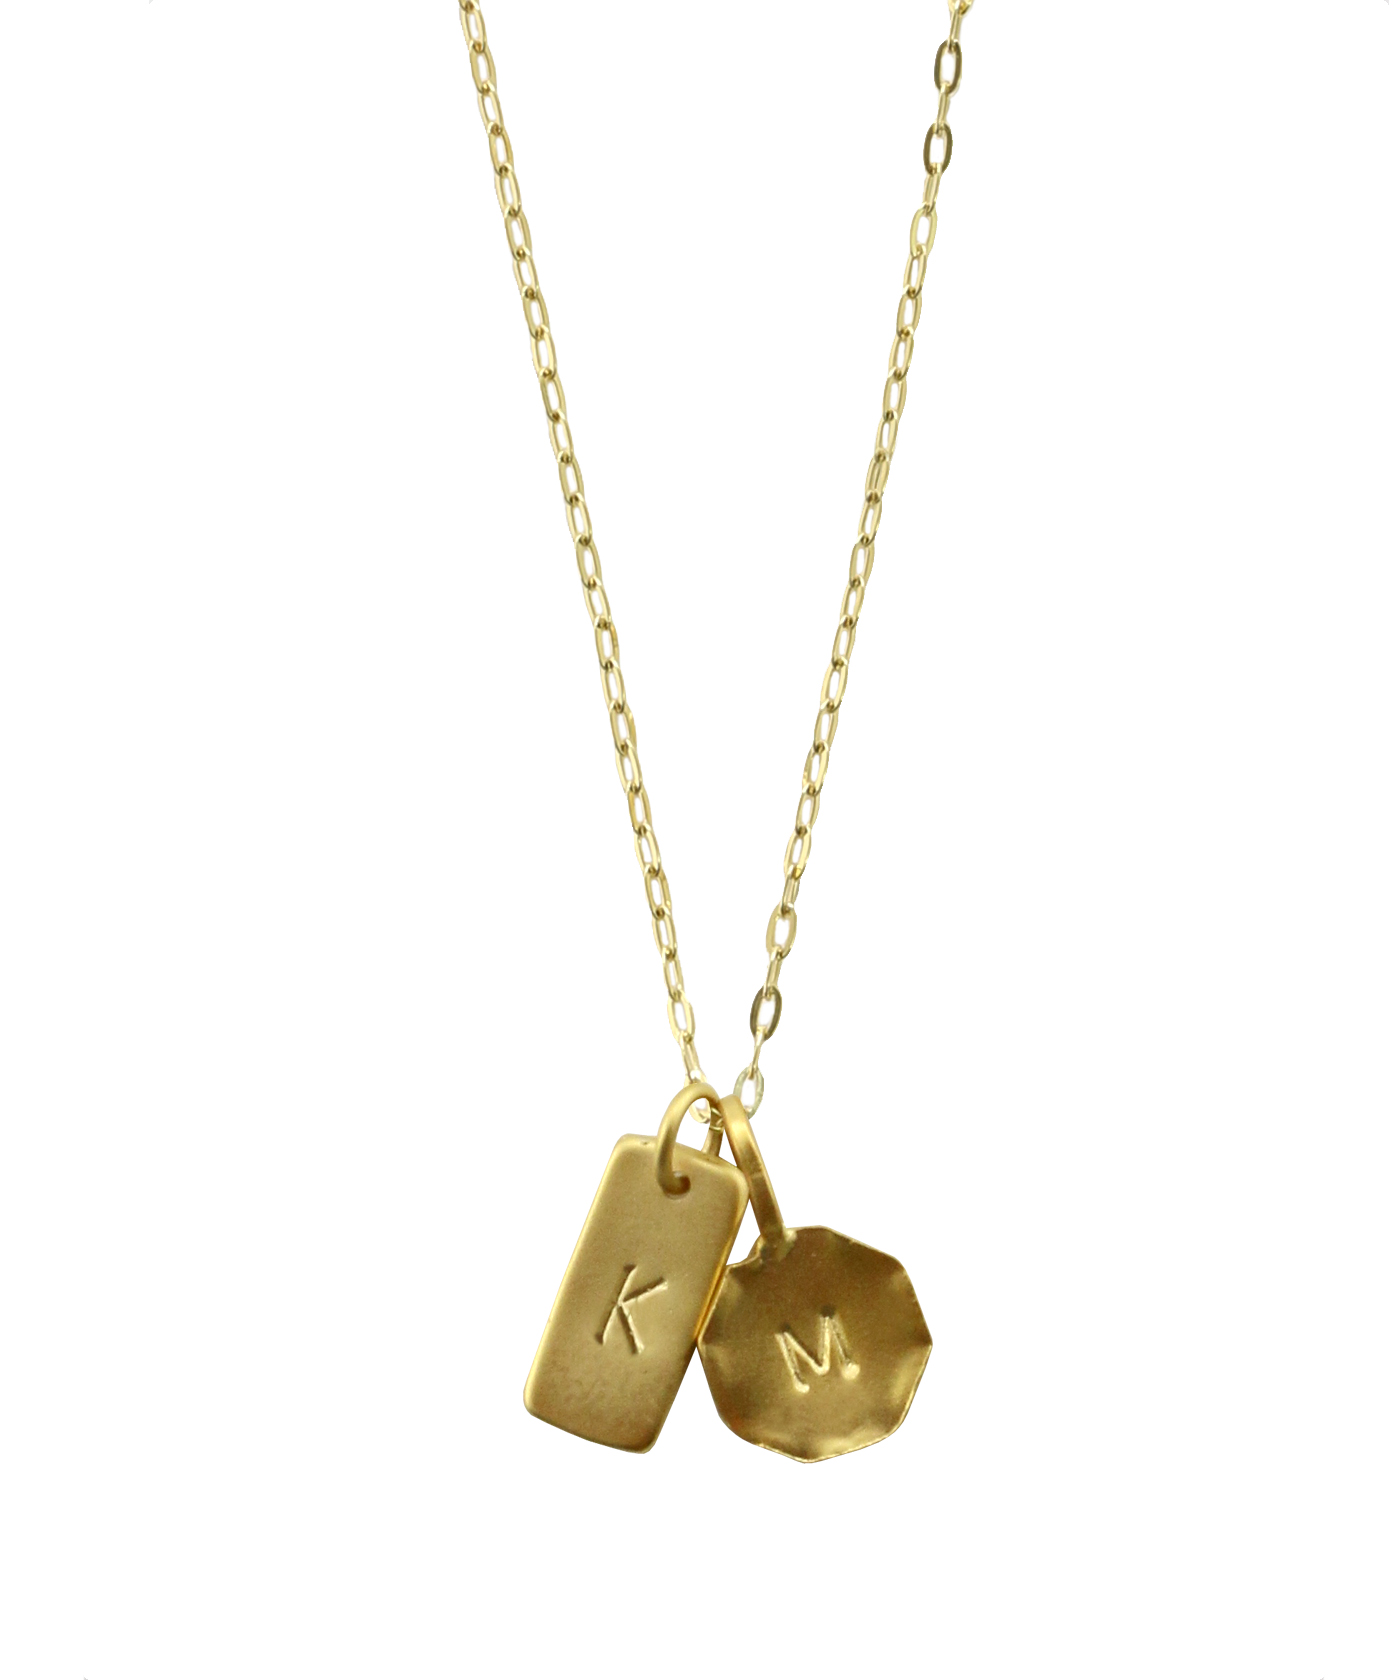 Gold Vermeil Monogram Necklace